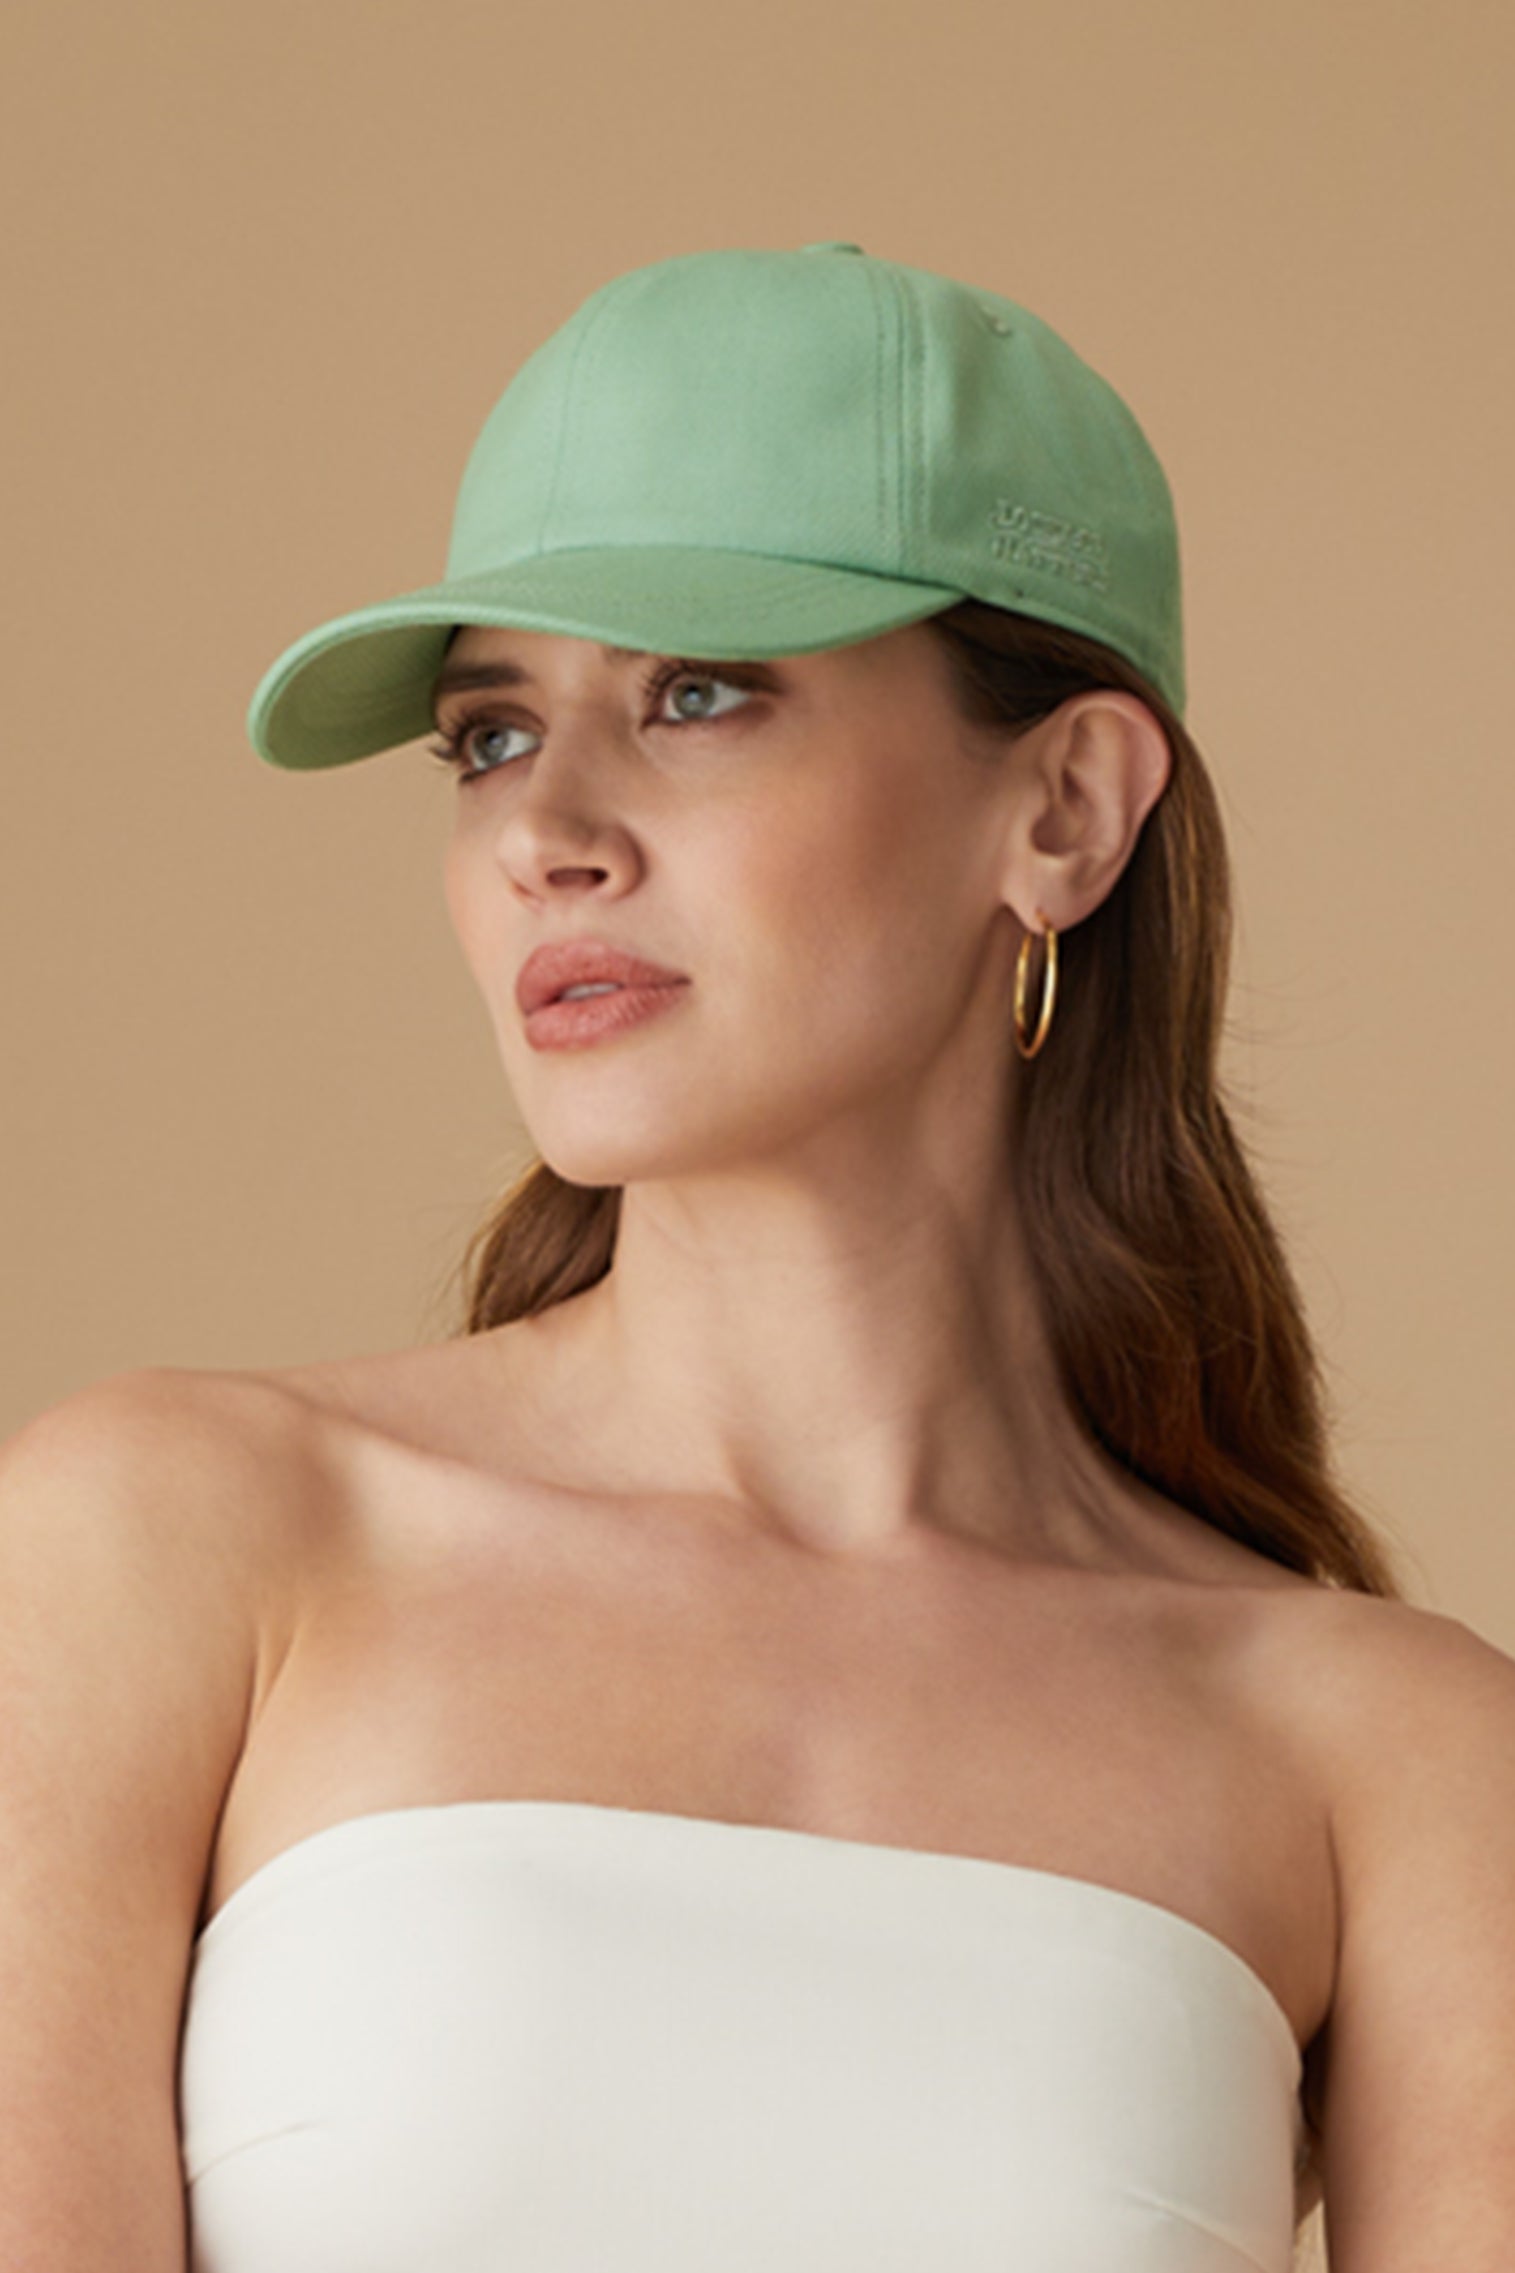 Adjustable Green Baseball Cap - New Season Hat Collection - Lock & Co. Hatters London UK